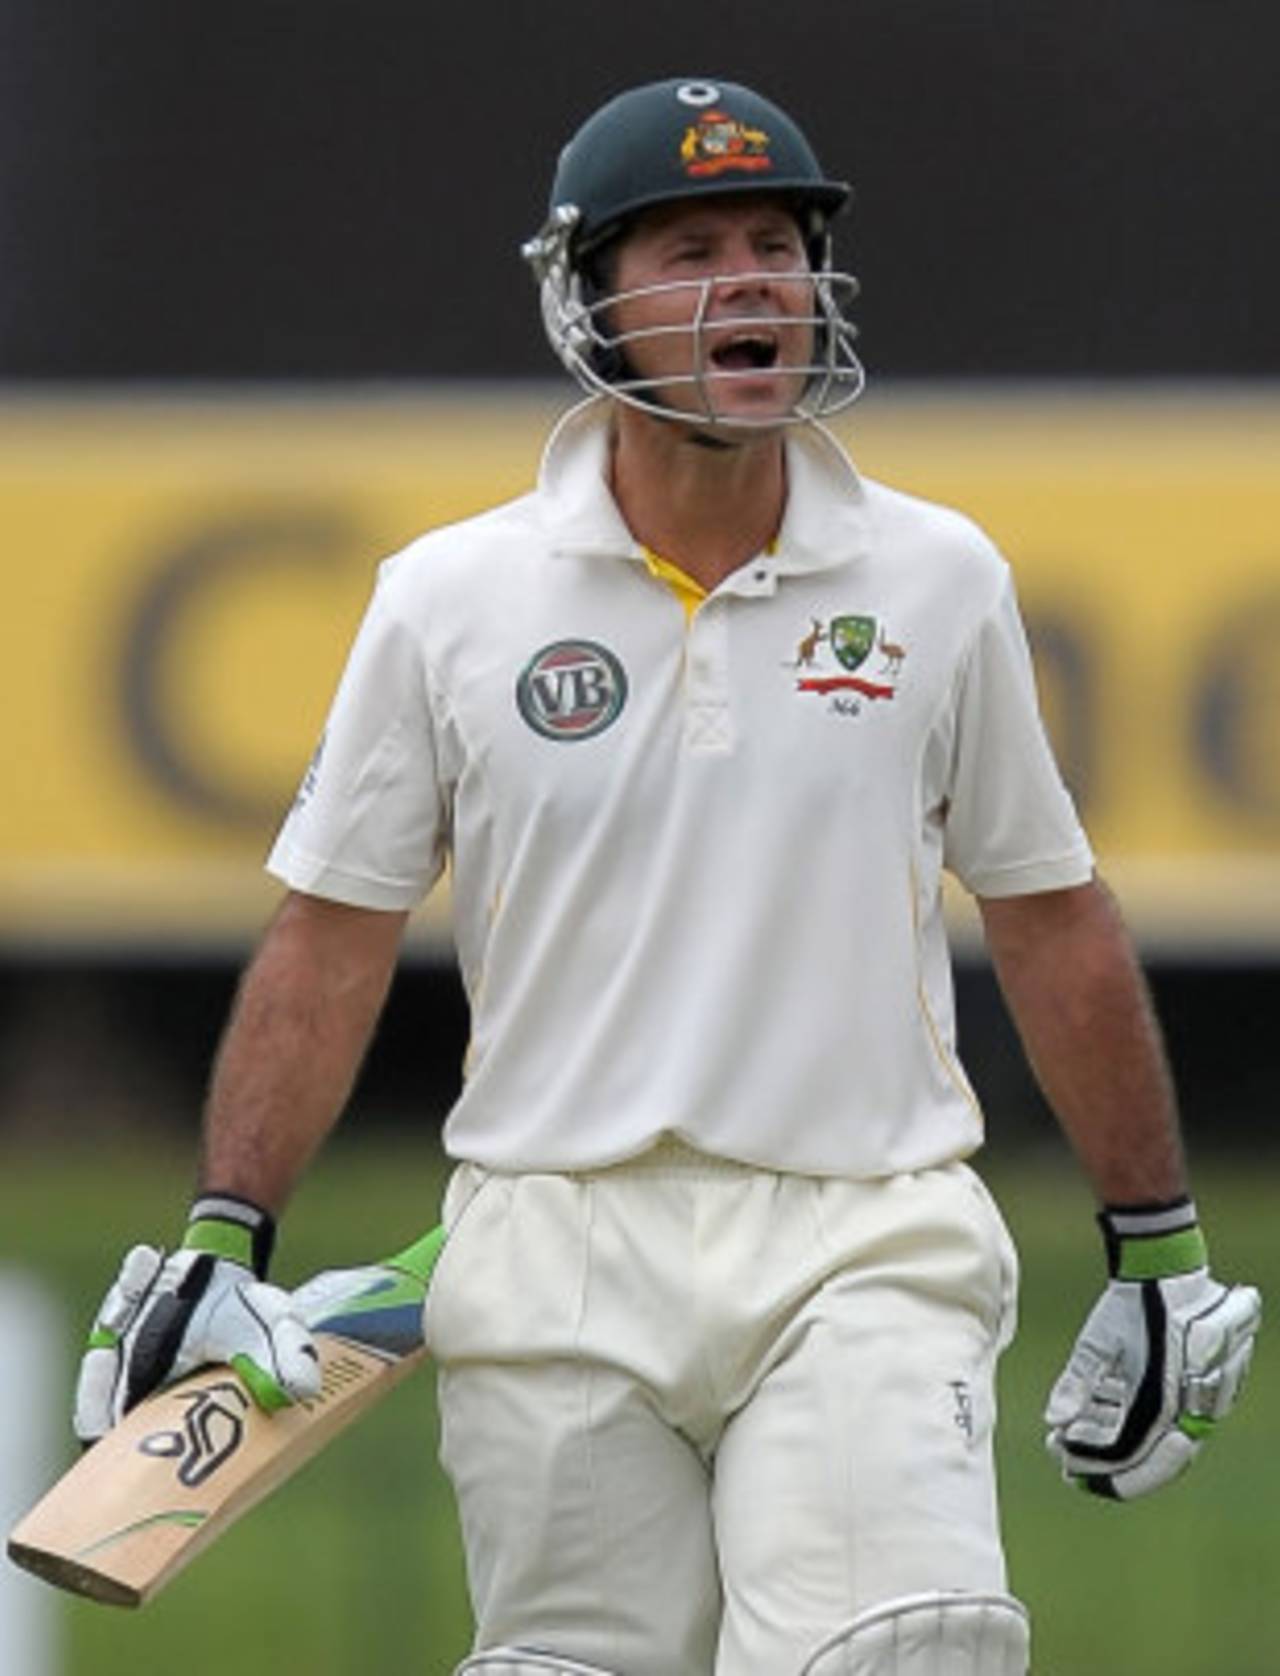 Ricky Ponting reacts after being dismissed, Sri Lanka v Australia, 3rd Test, SSC, Colombo, 1st day, September 16, 2011